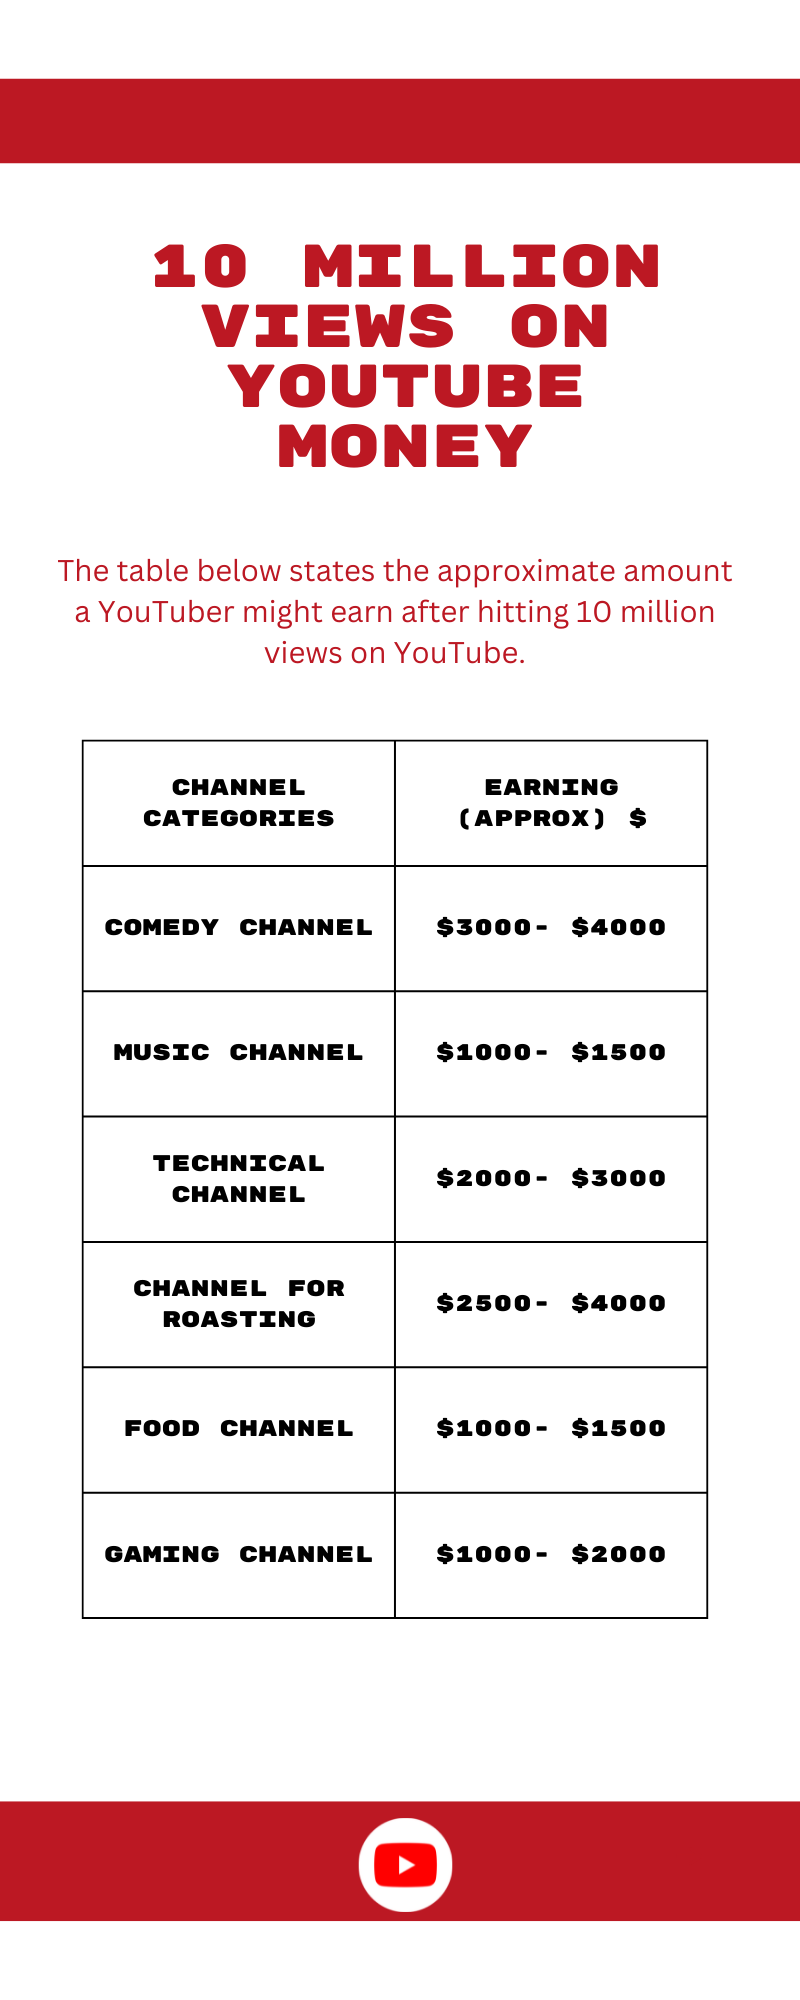 10 Million Views On YouTube Money